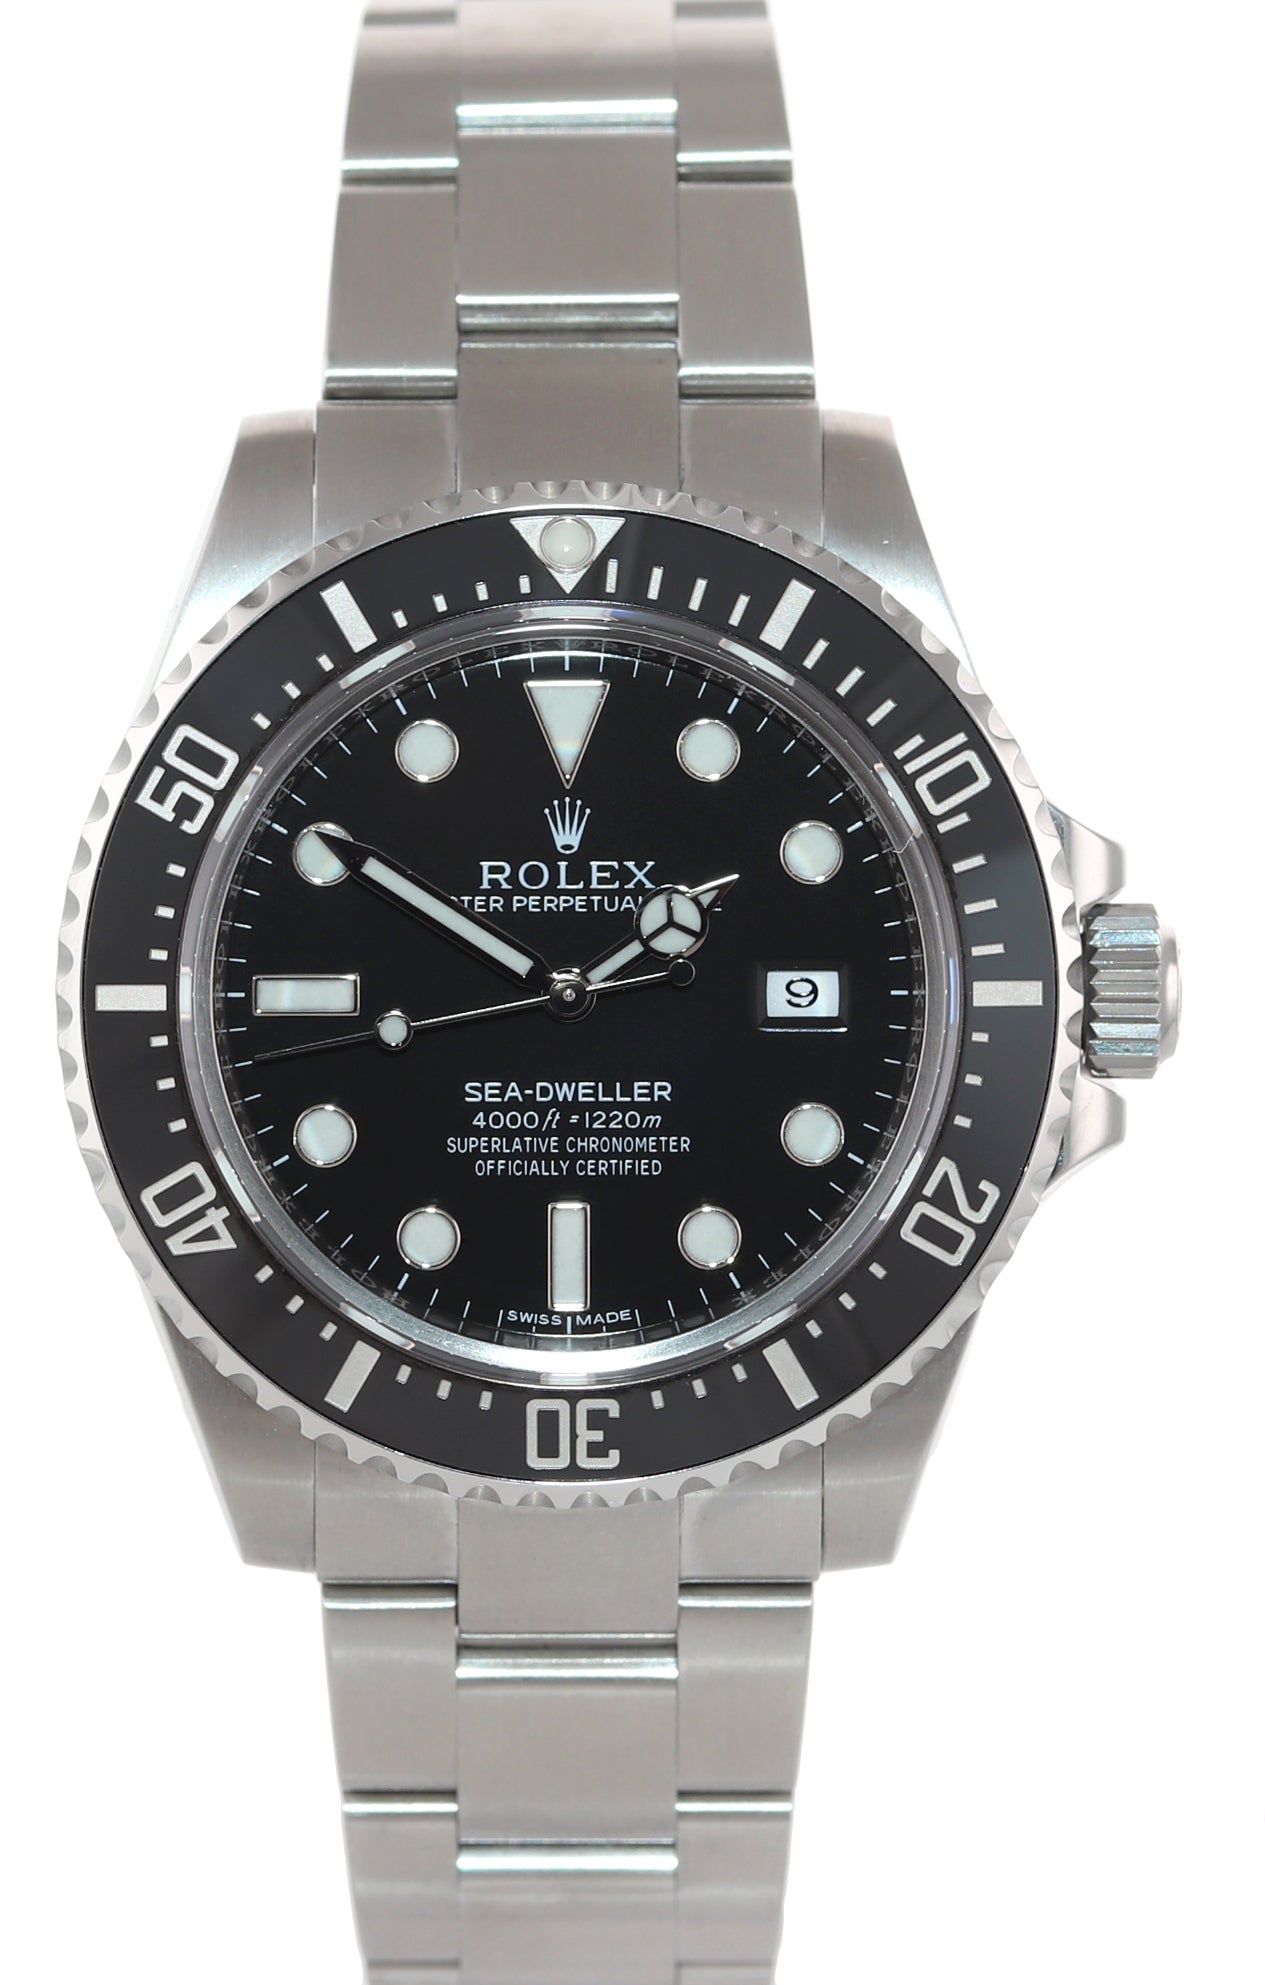 MINT Rolex Sea-Dweller Black Ceramic 116600 Steel SDK Watch Box